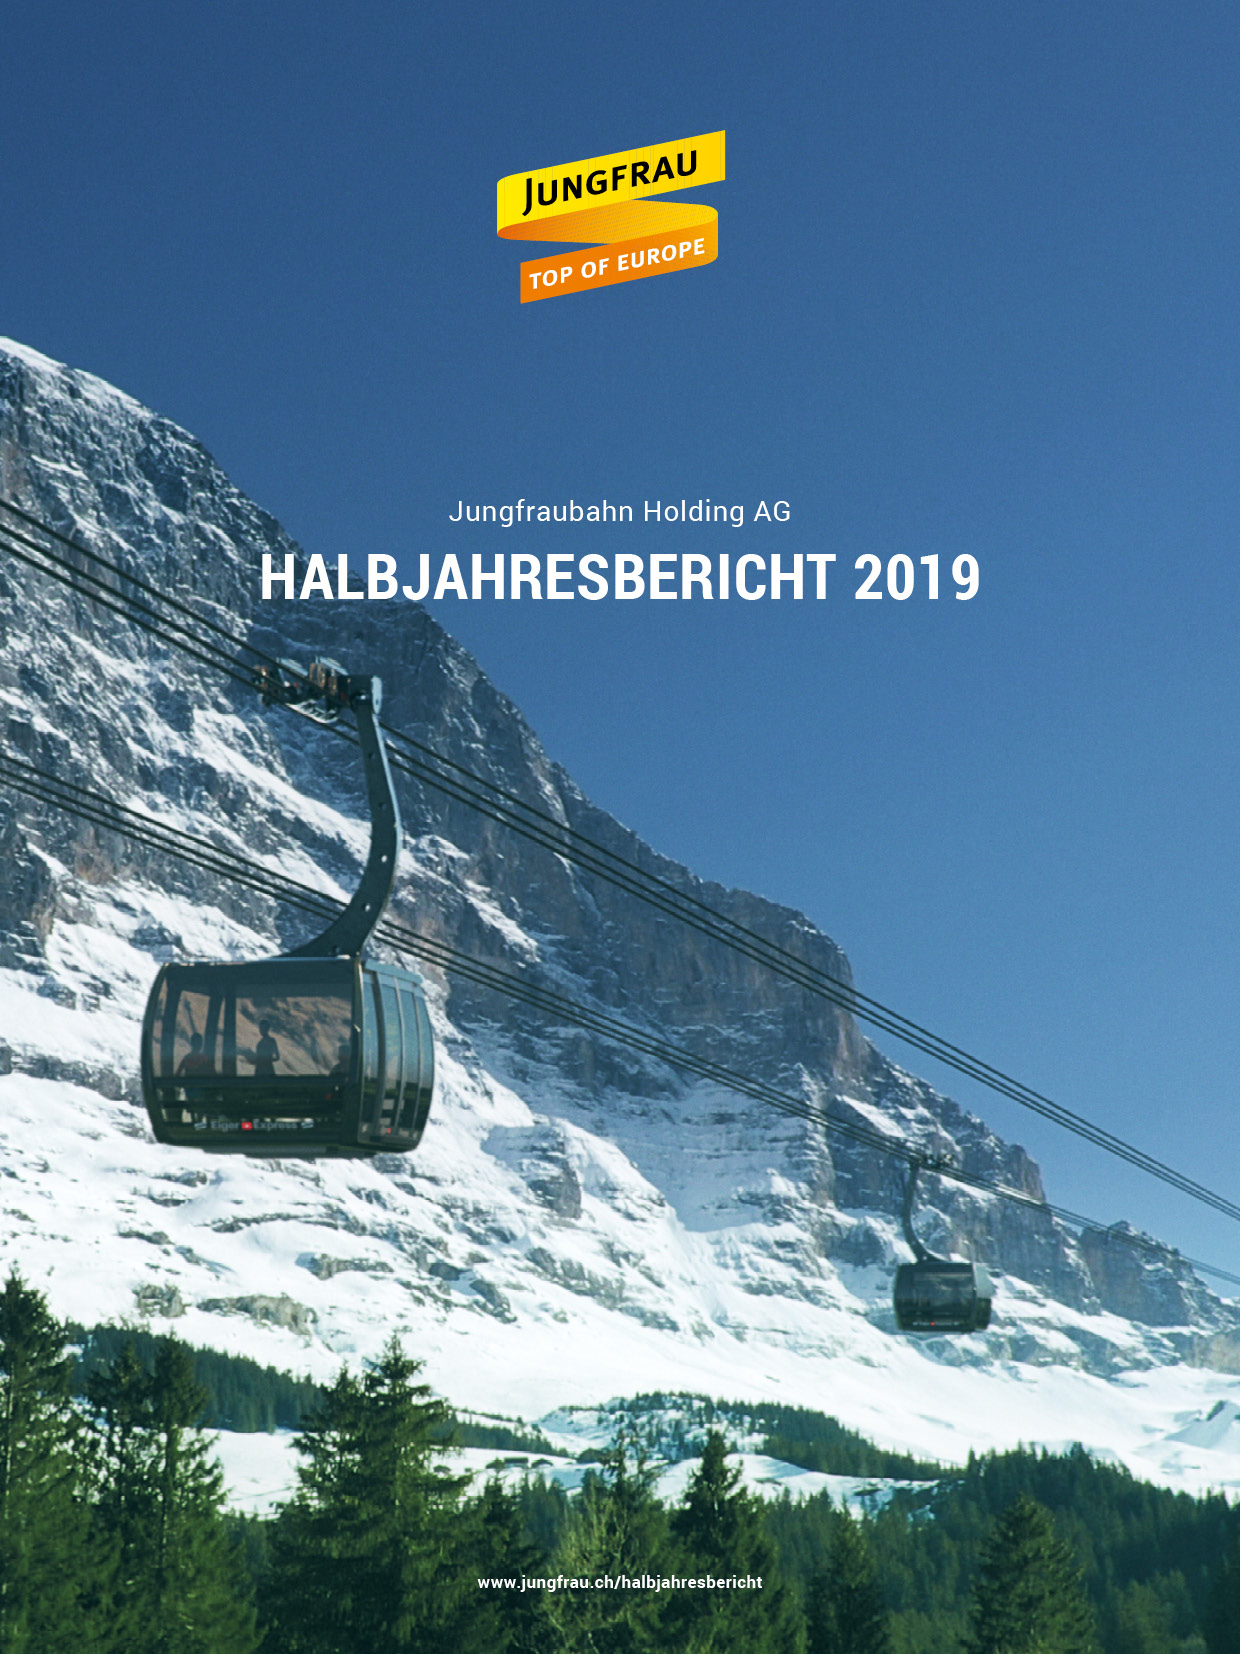 Halbjahresbericht 2019 der Jungfraubahn Holding AG